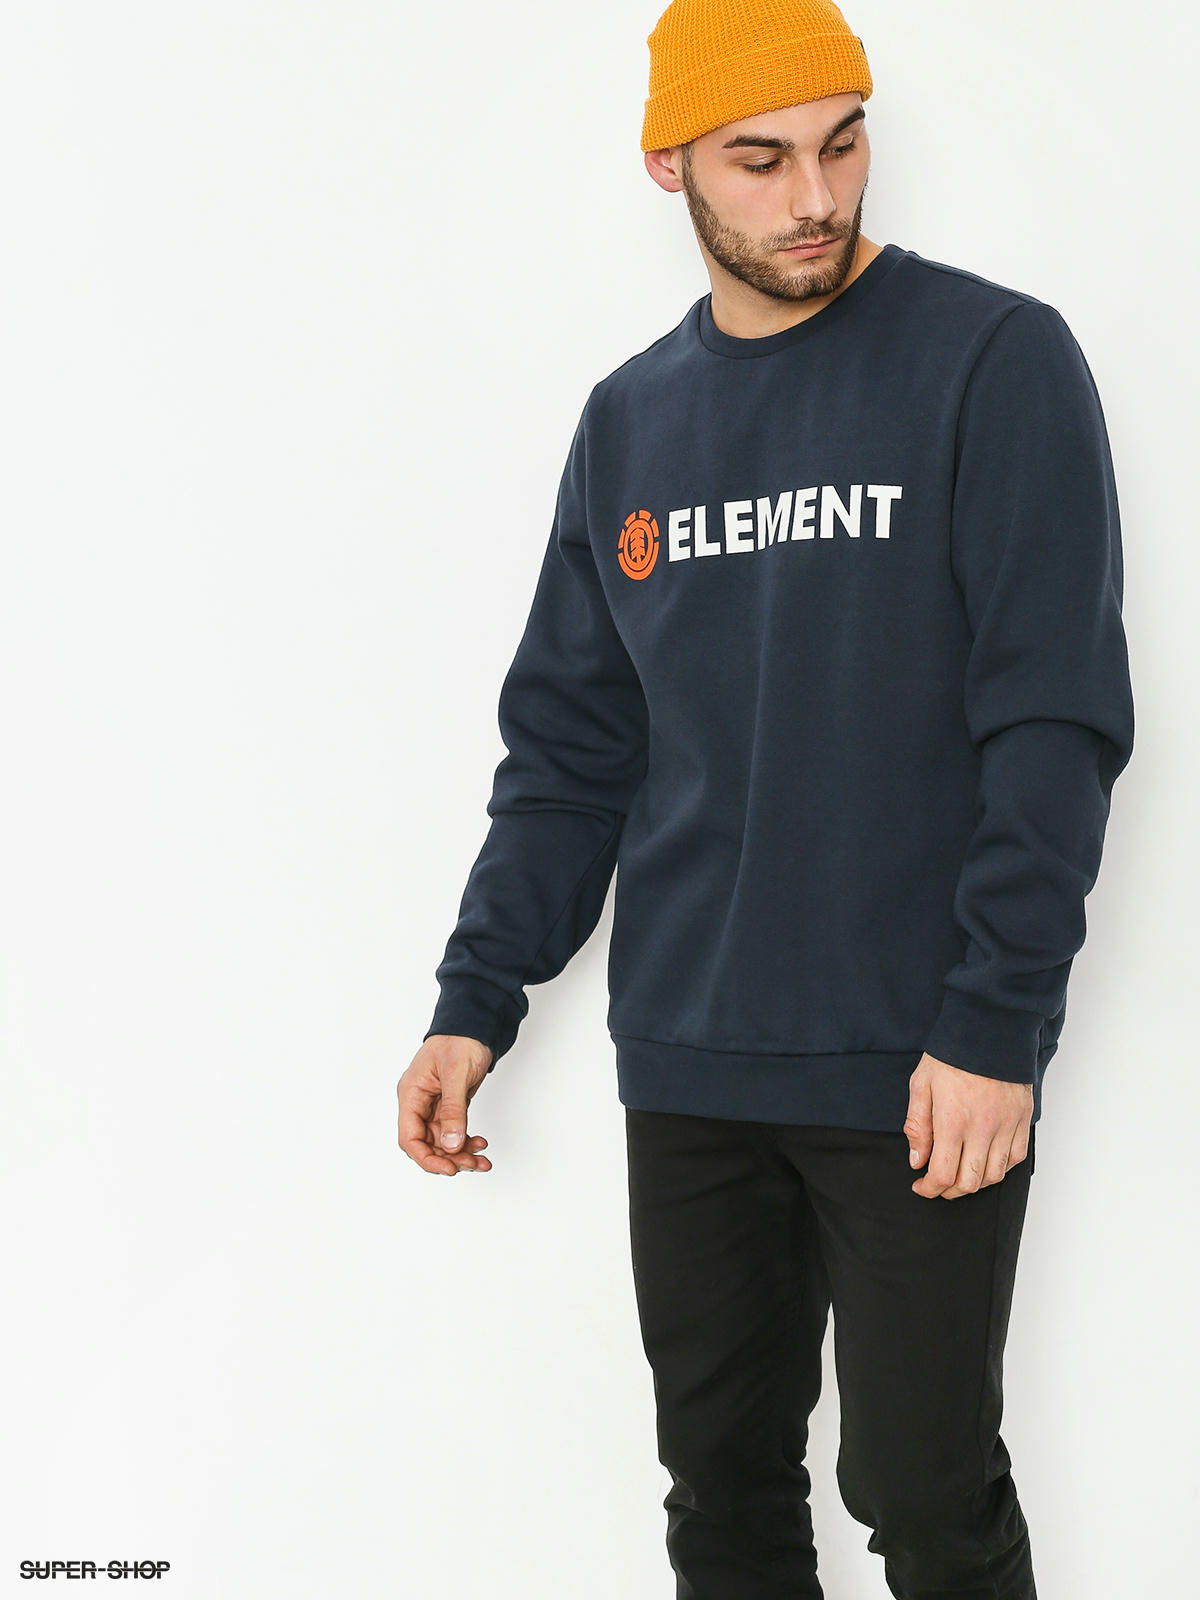 element sweatshirt